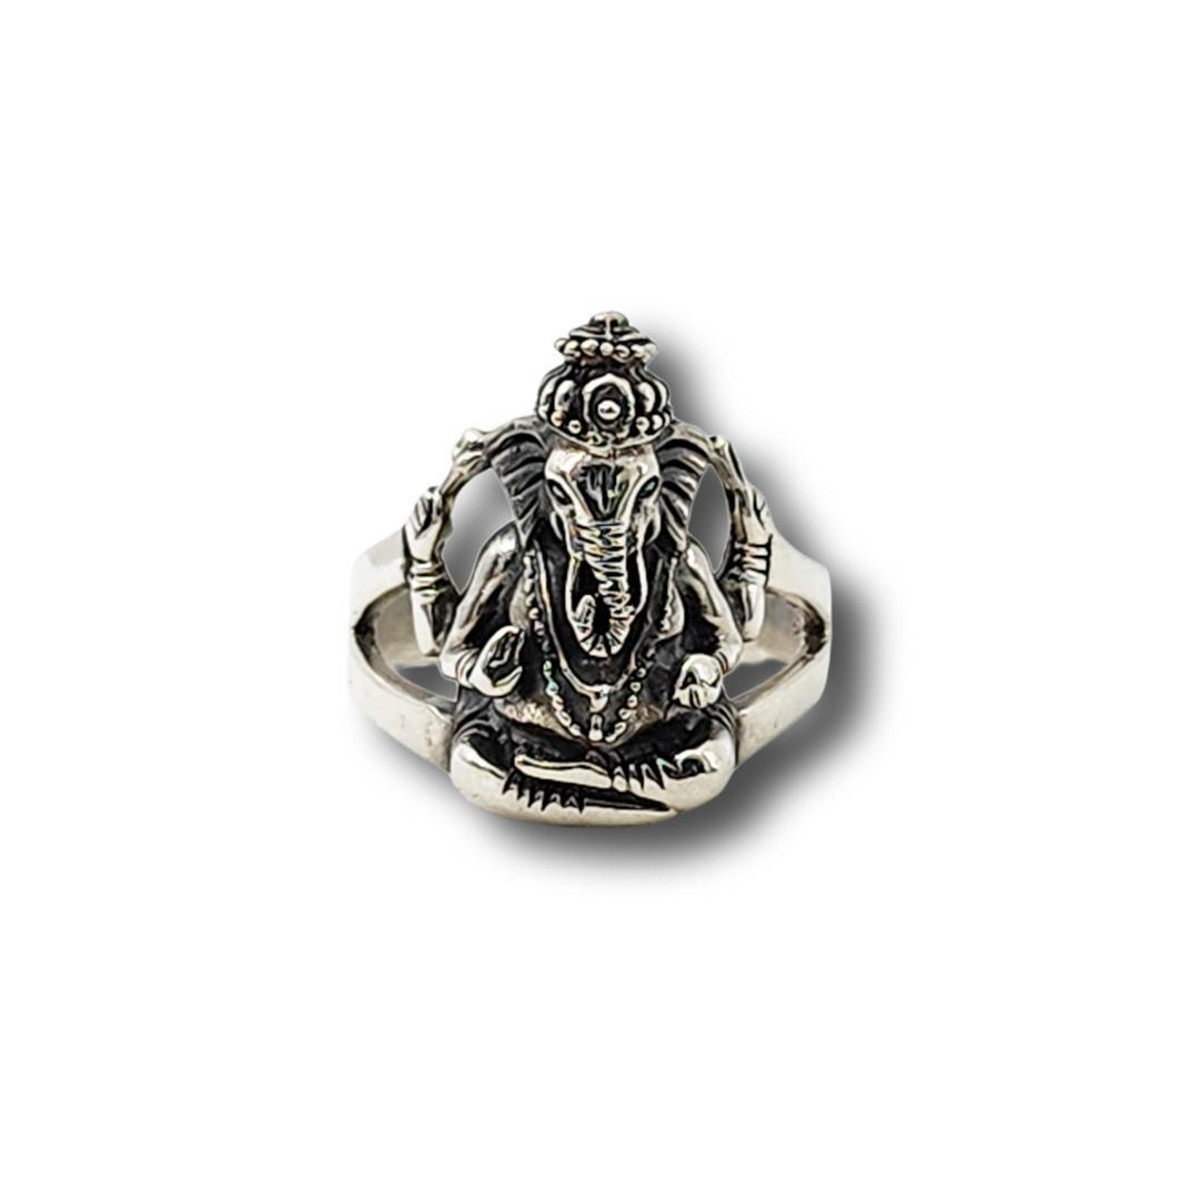 Gold Baby Ganesha Ring 22 Karat – aabhushan Jewelers